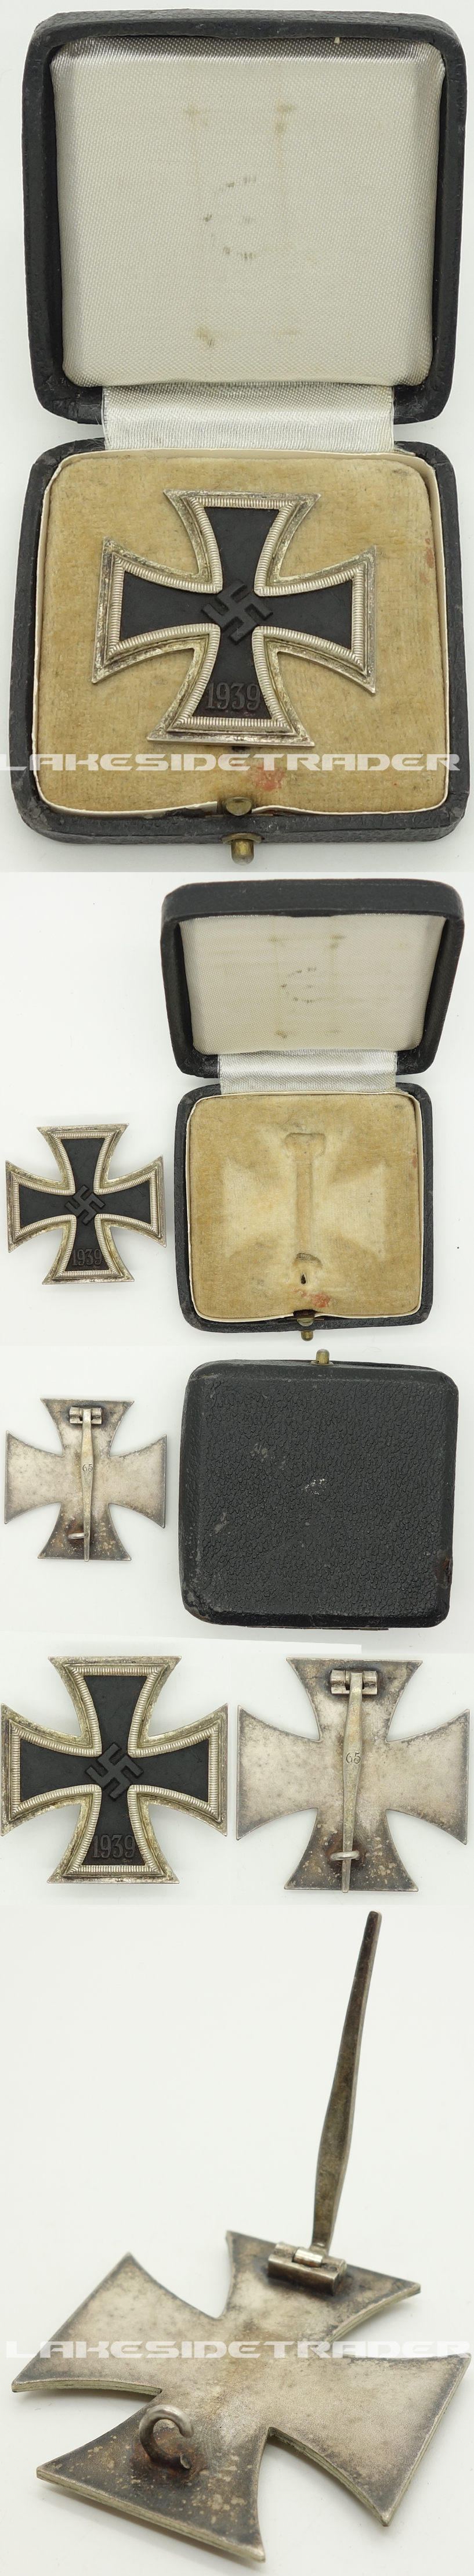 Cased & Carton 1st Class Iron Cross by 65